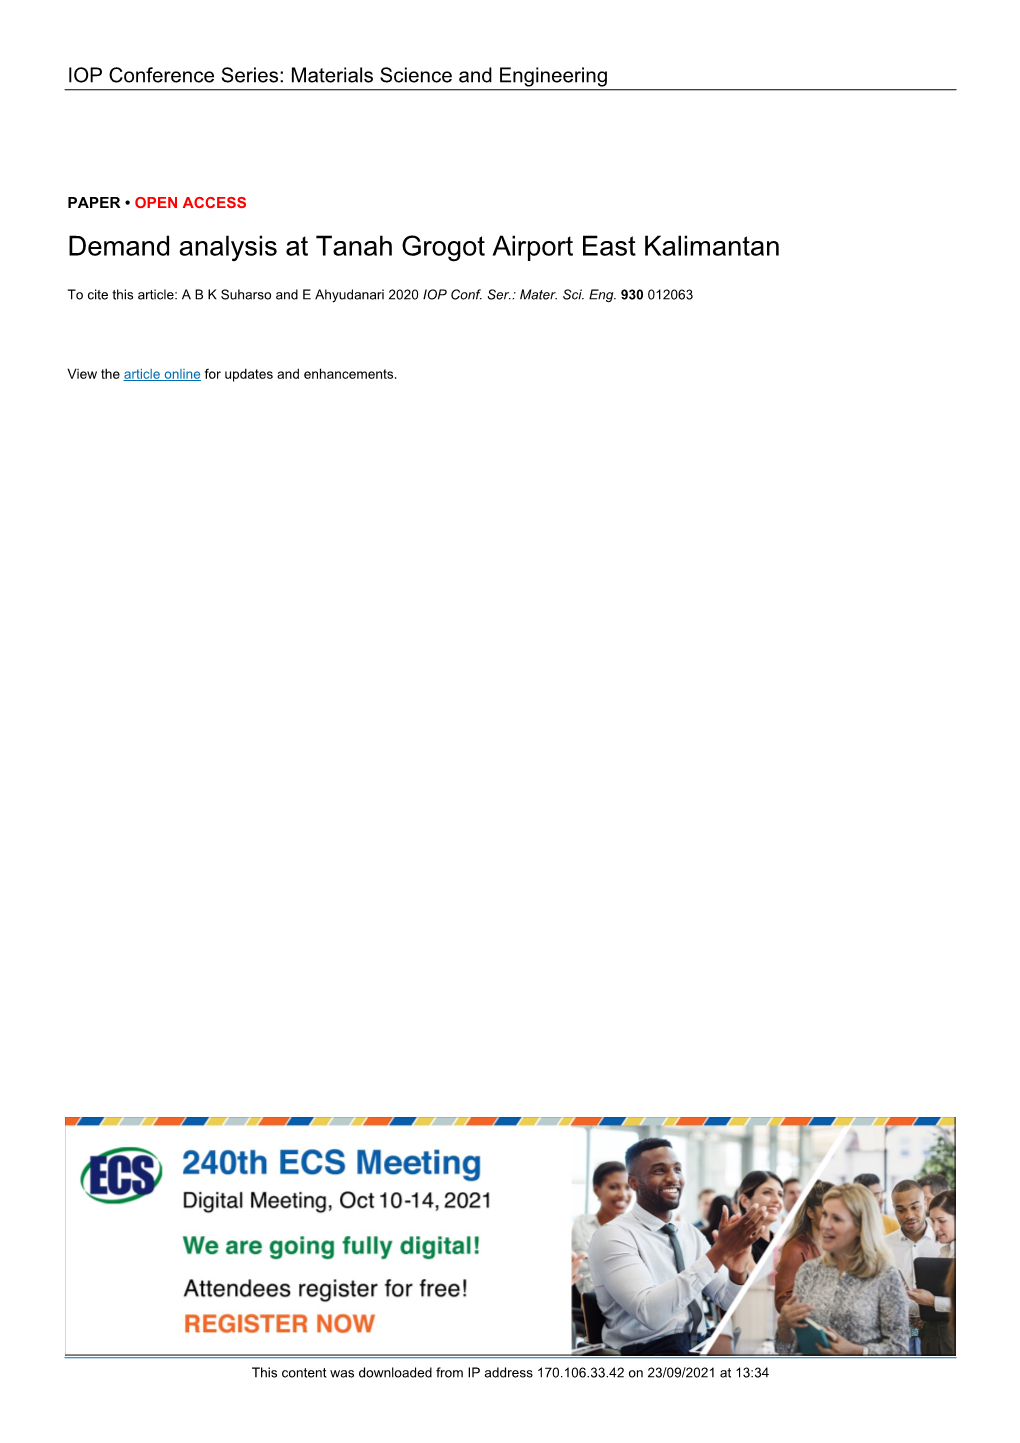 Demand Analysis at Tanah Grogot Airport East Kalimantan